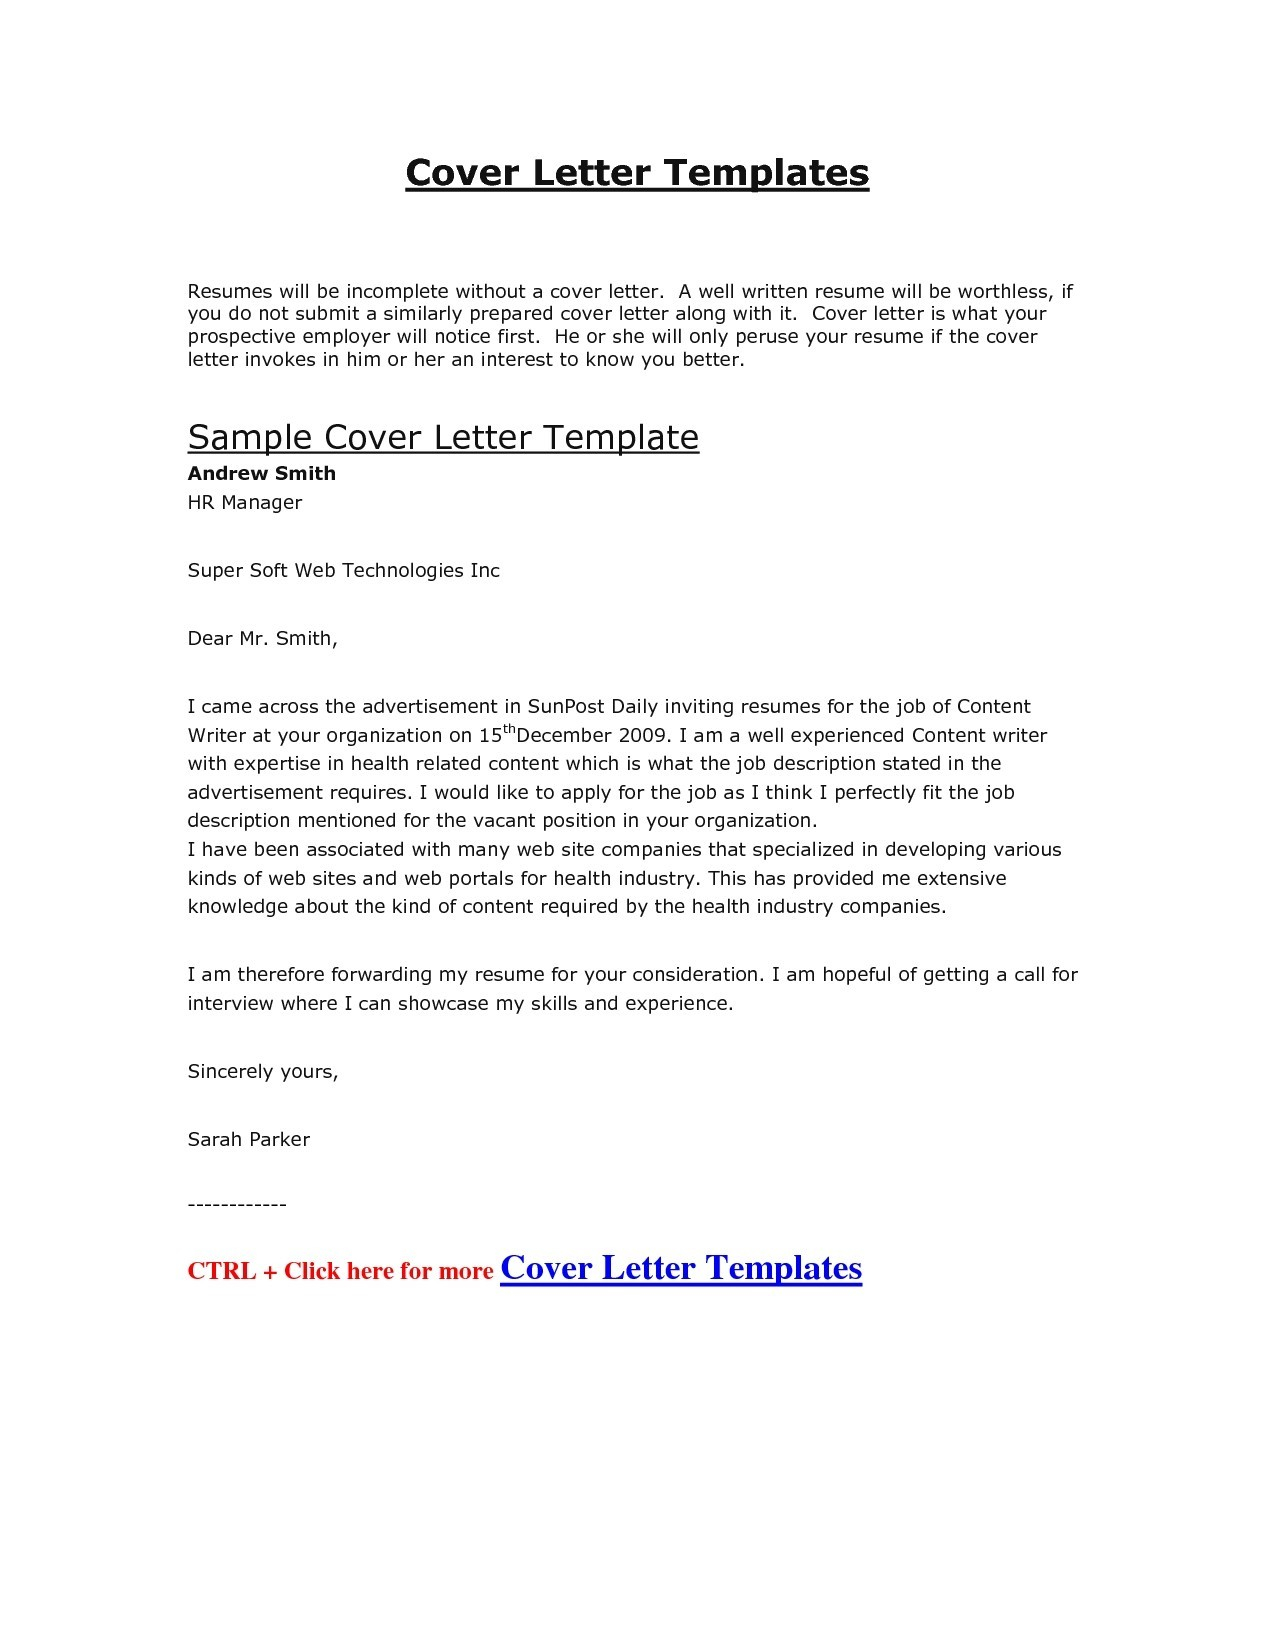 T format Cover Letter Template - Job Application Letter format Template Copy Cover Letter Template Hr